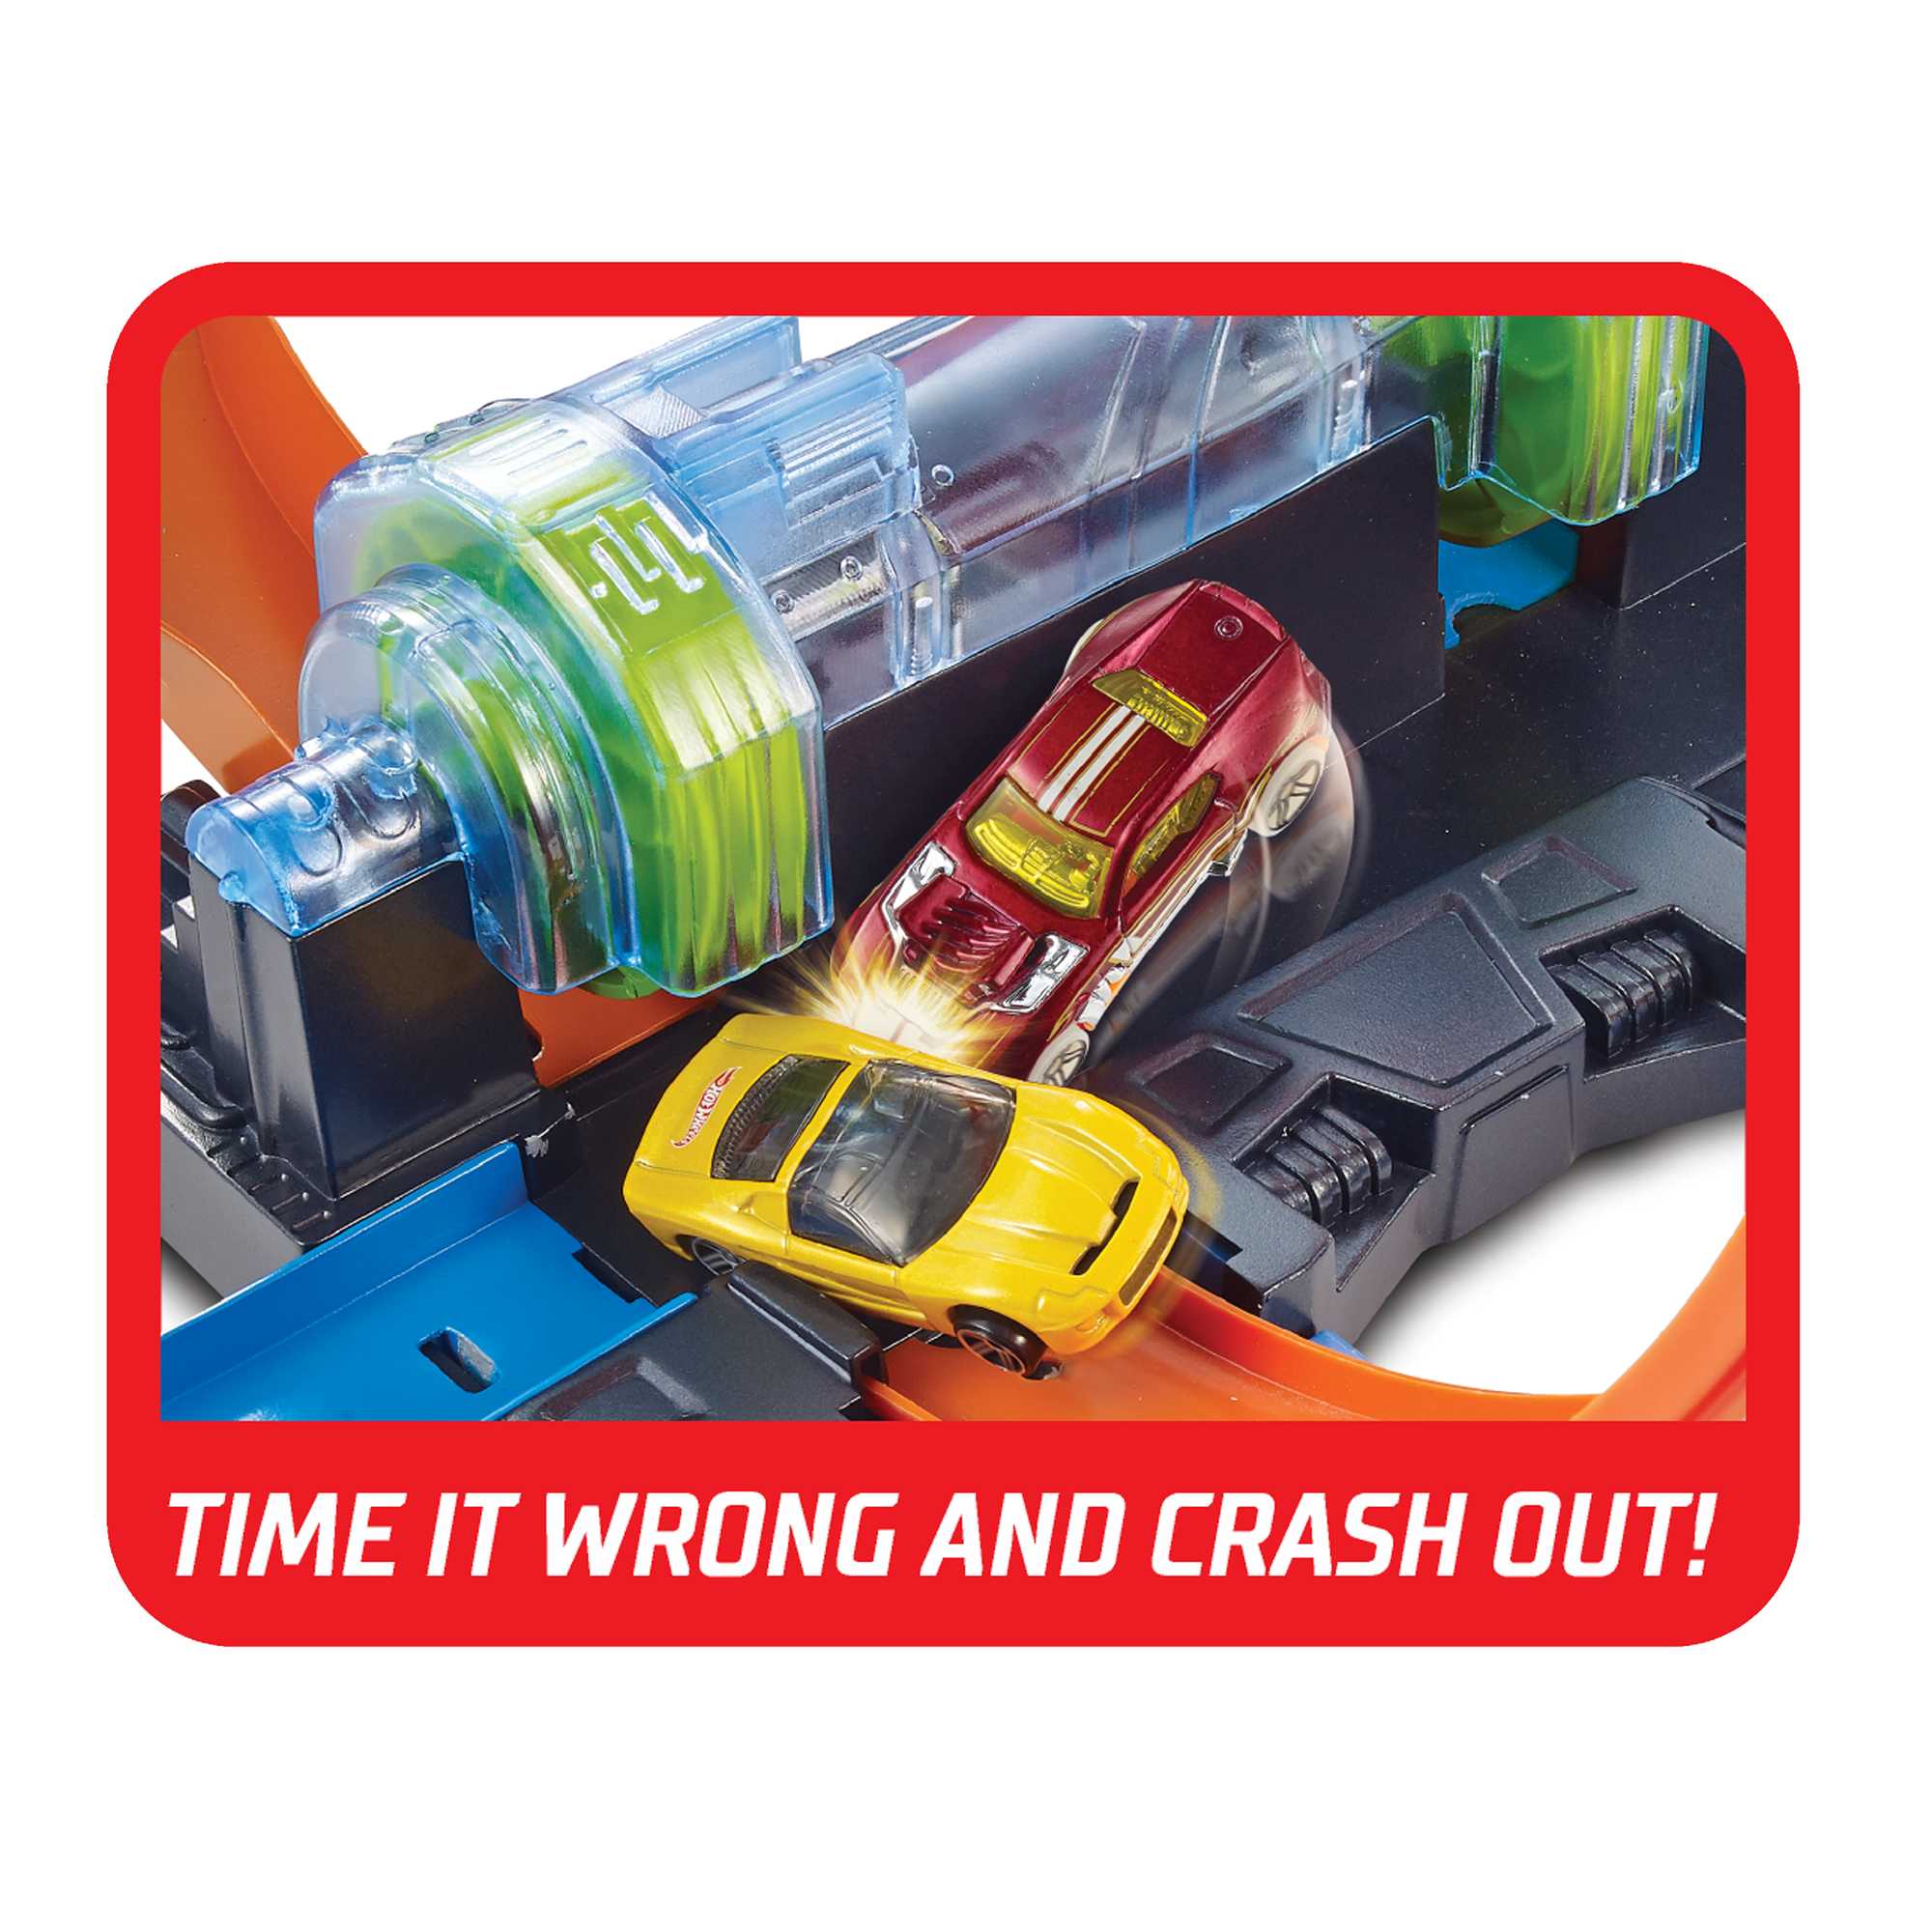 Hot Wheels Corkscrew Crash Track Set | Mattel